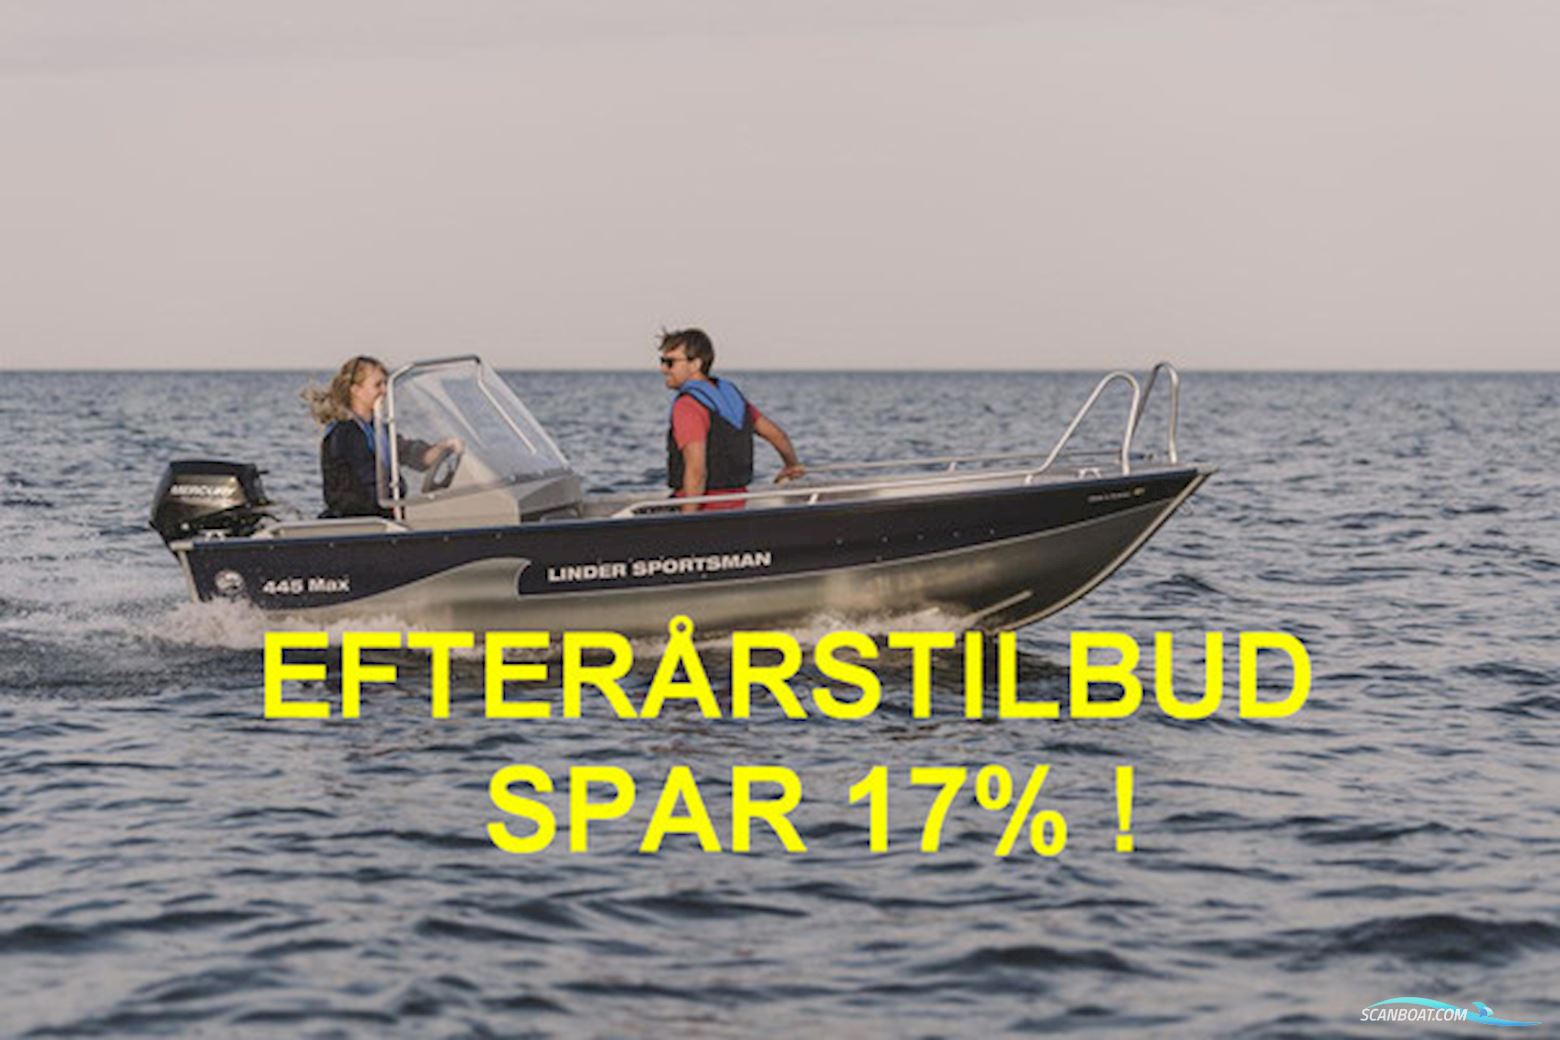 Linder 445 Max m/Mercury F20 hk Efi - Spar 17% = KR. 20.625,- ! Motorbåd 2024, Danmark